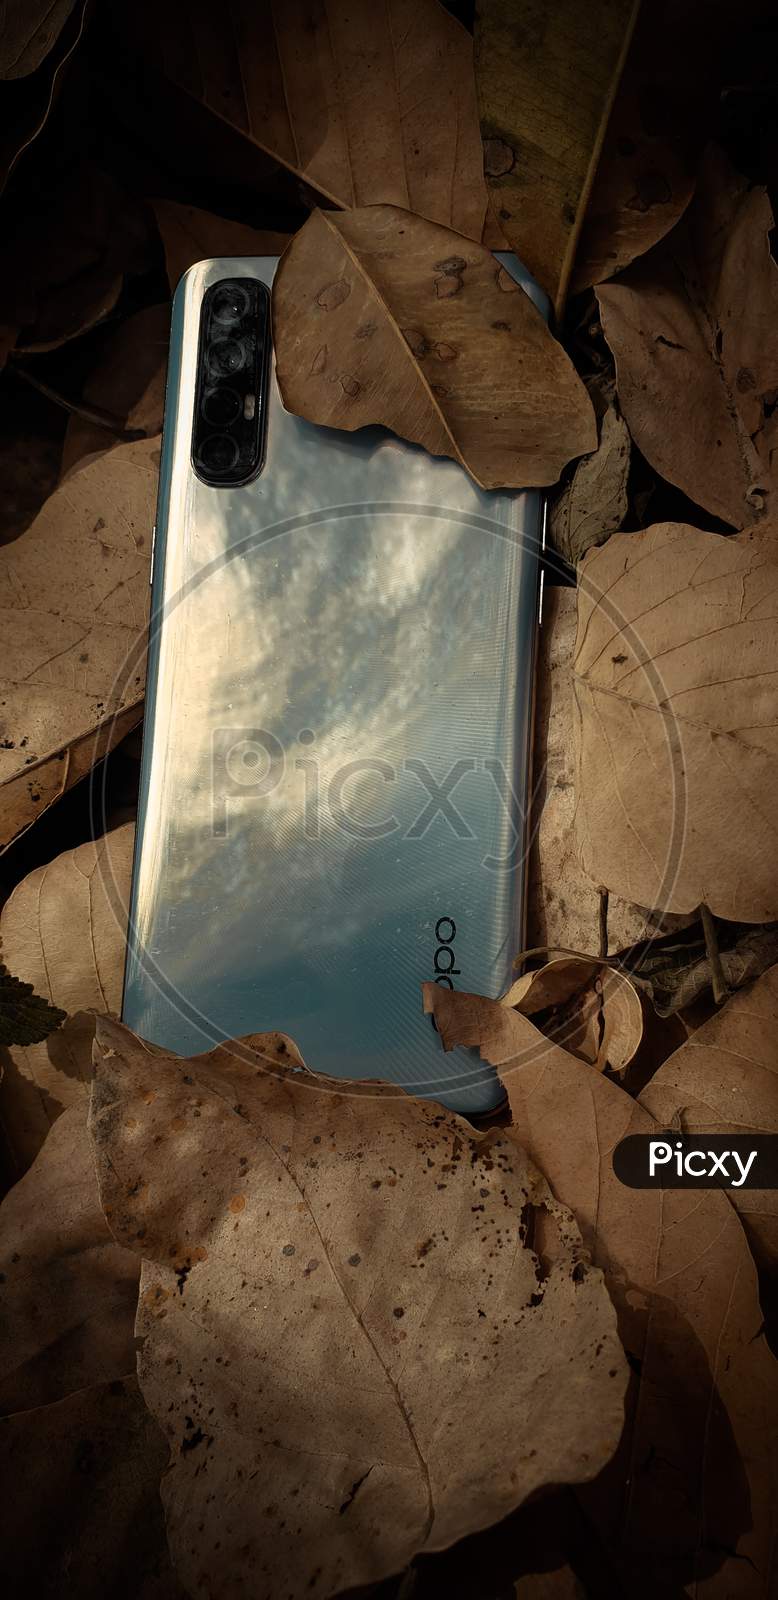 Phone under leaves